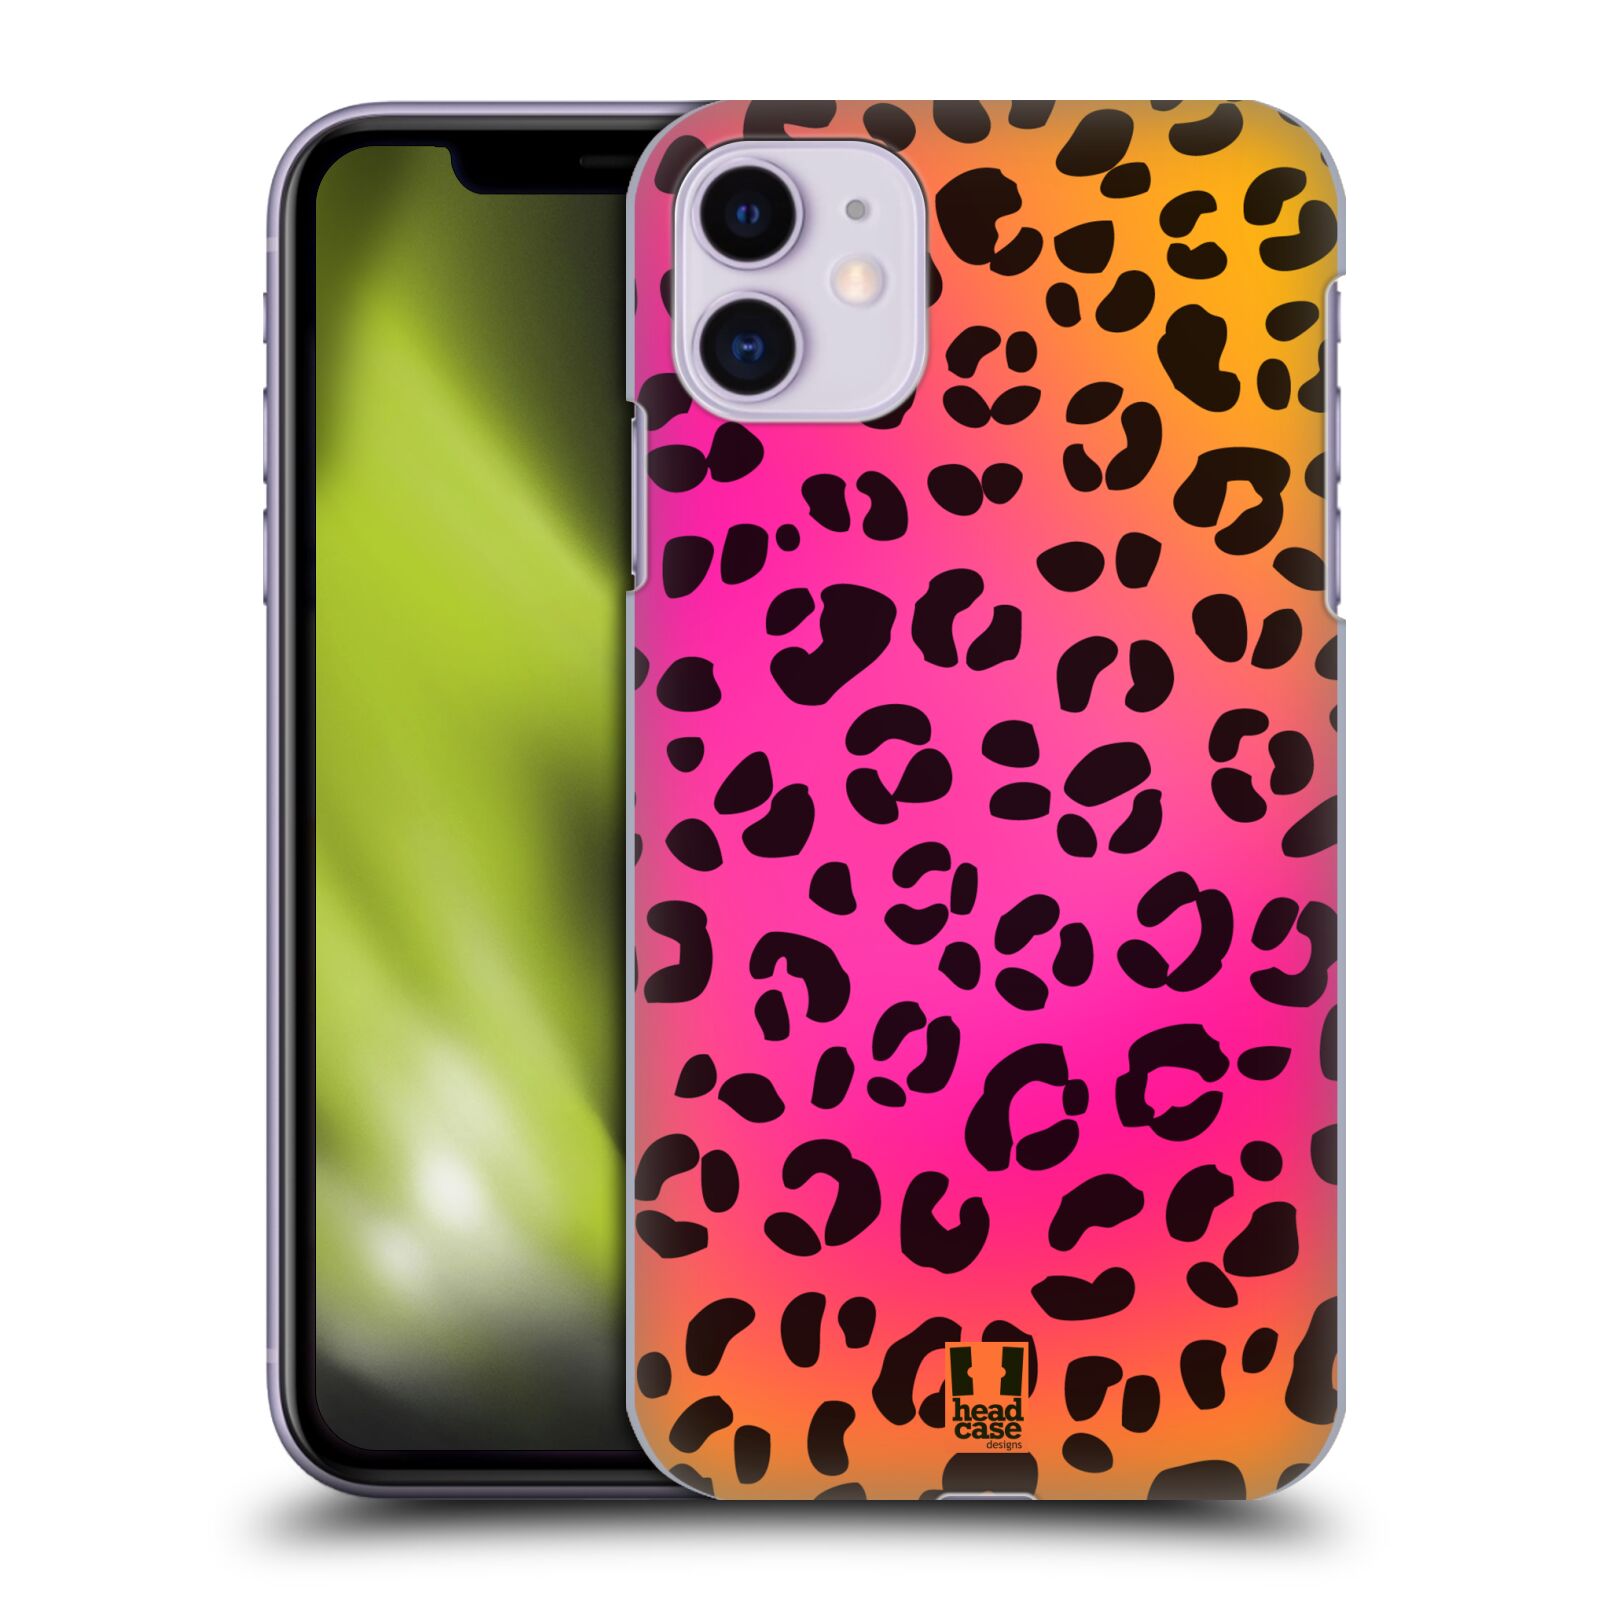 Pouzdro na mobil Apple Iphone 11 - HEAD CASE - vzor Divočina zvíře růžový leopard